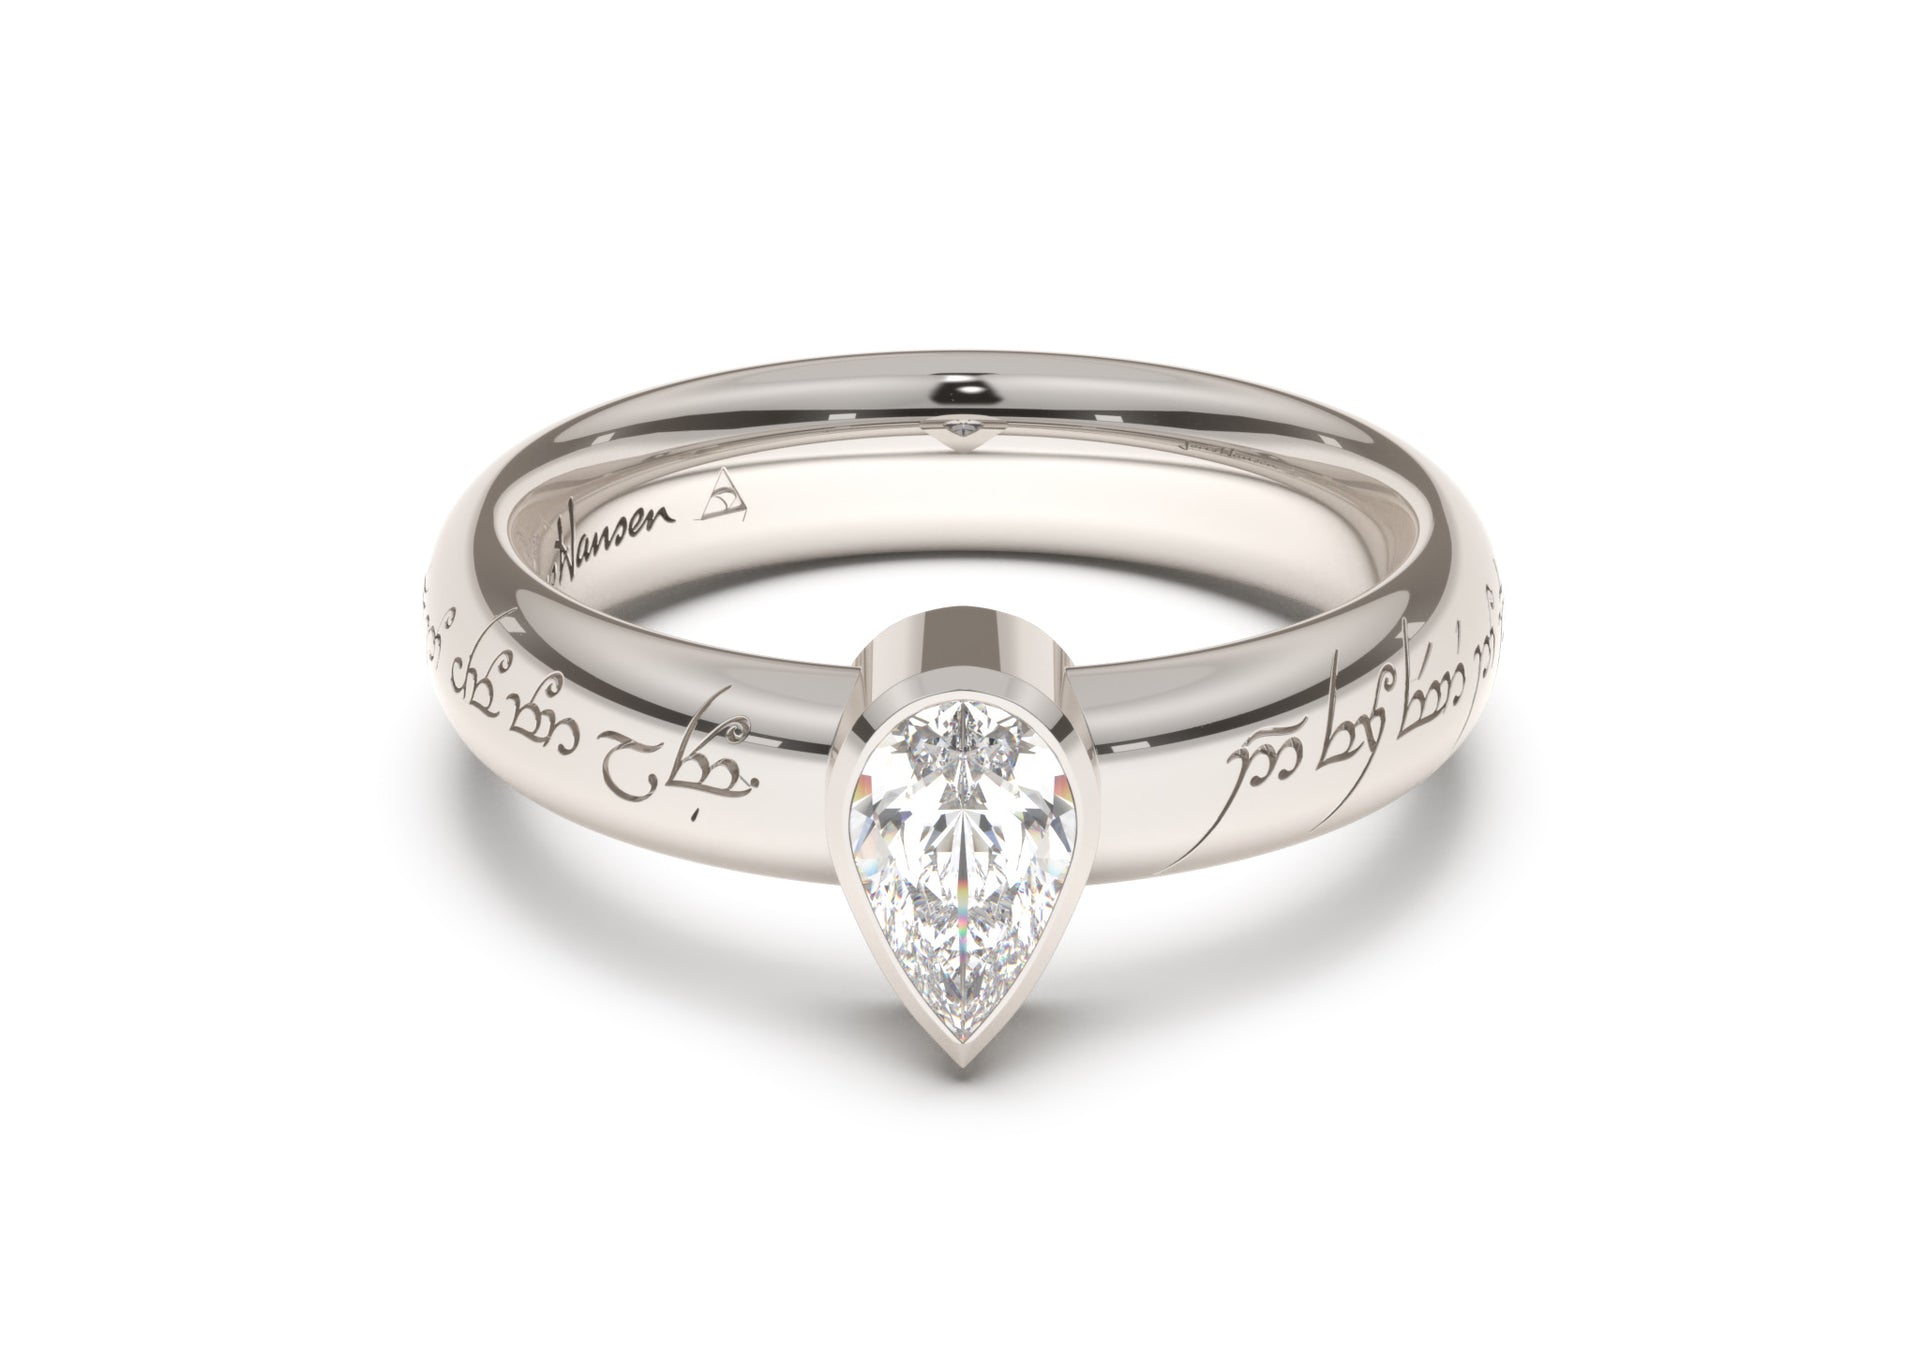 Pear Modern Elvish Engagement Ring, White Gold & Platinum